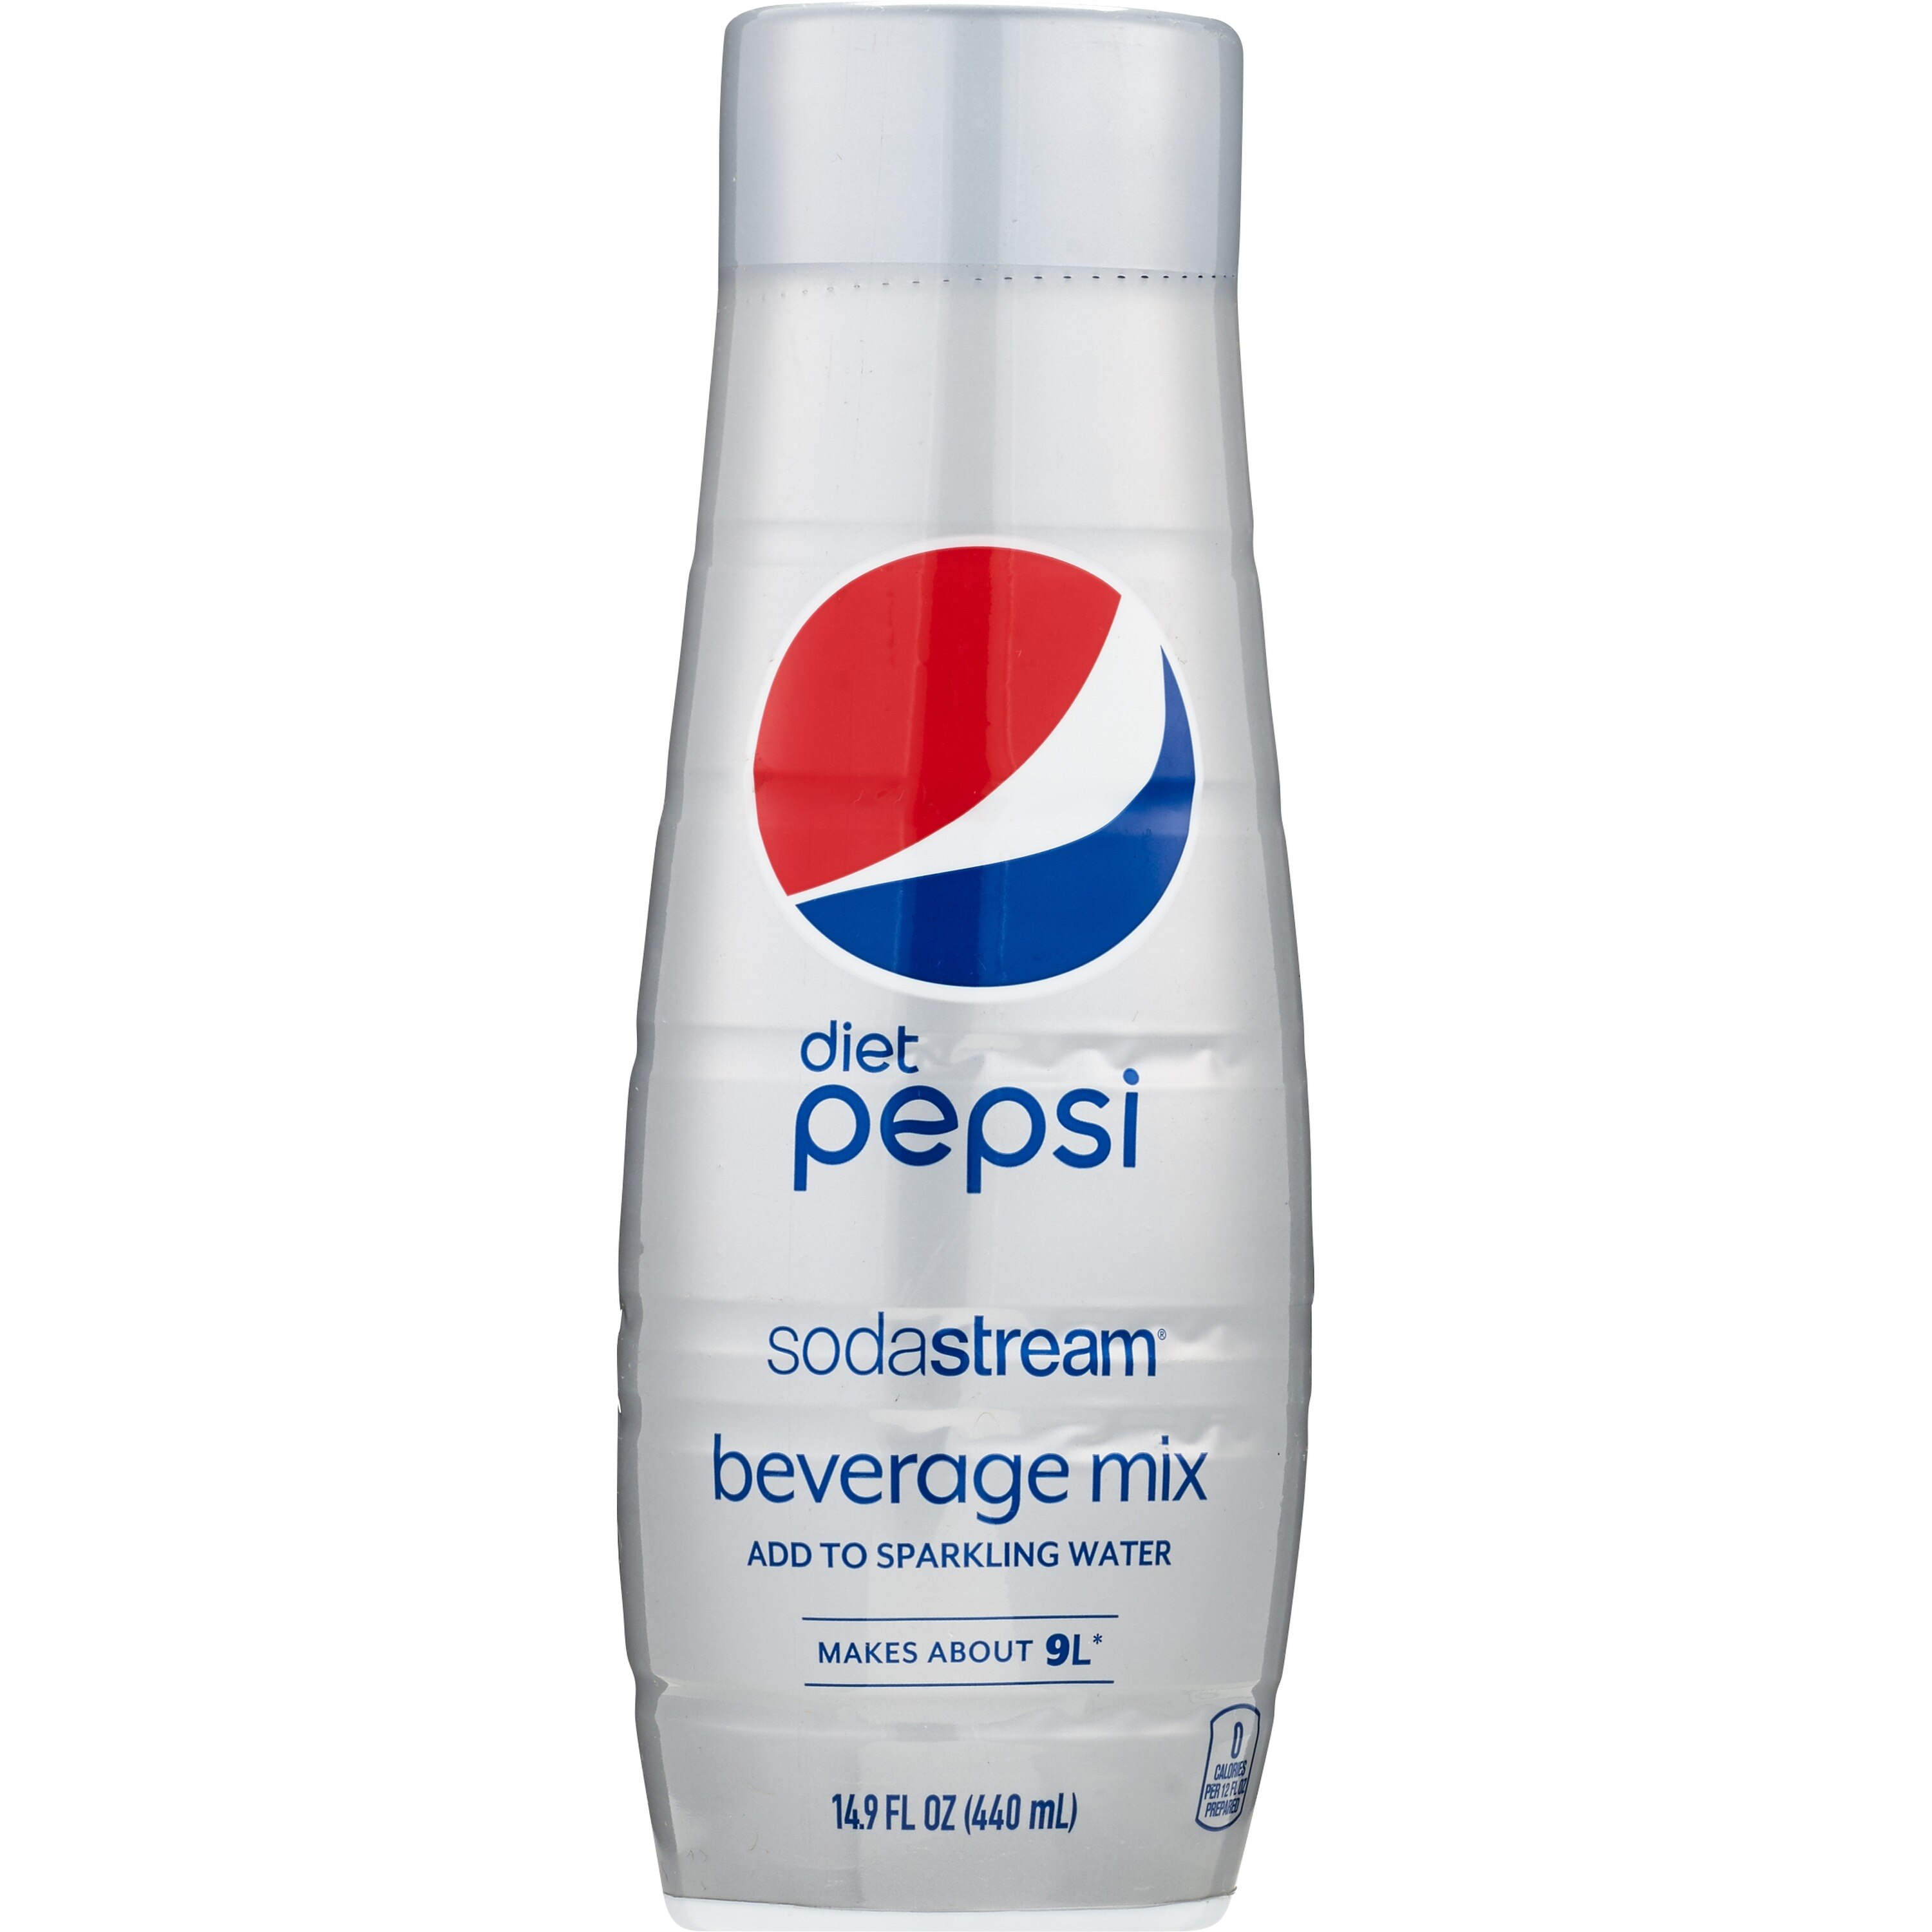 SodaStream Diet Pepsi Beverage Mix, 14.9 fl oz Ingredients - CVS Pharmacy